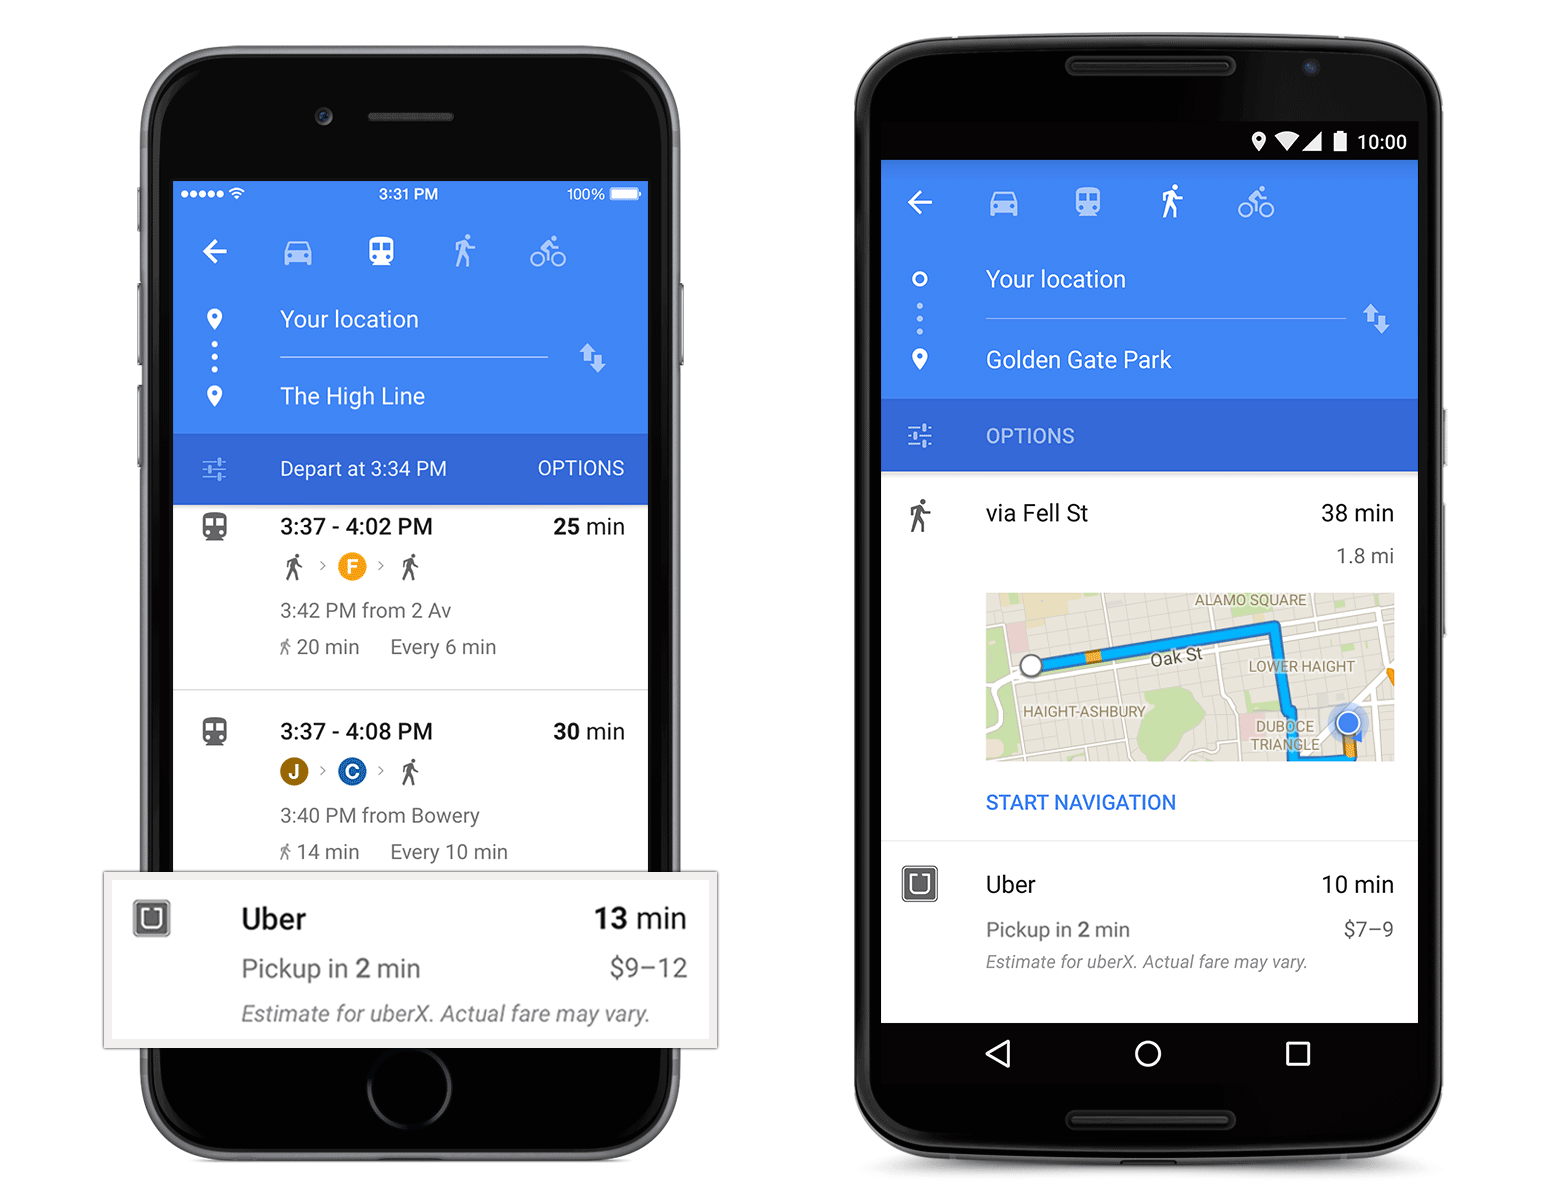 Uber card in Google Maps